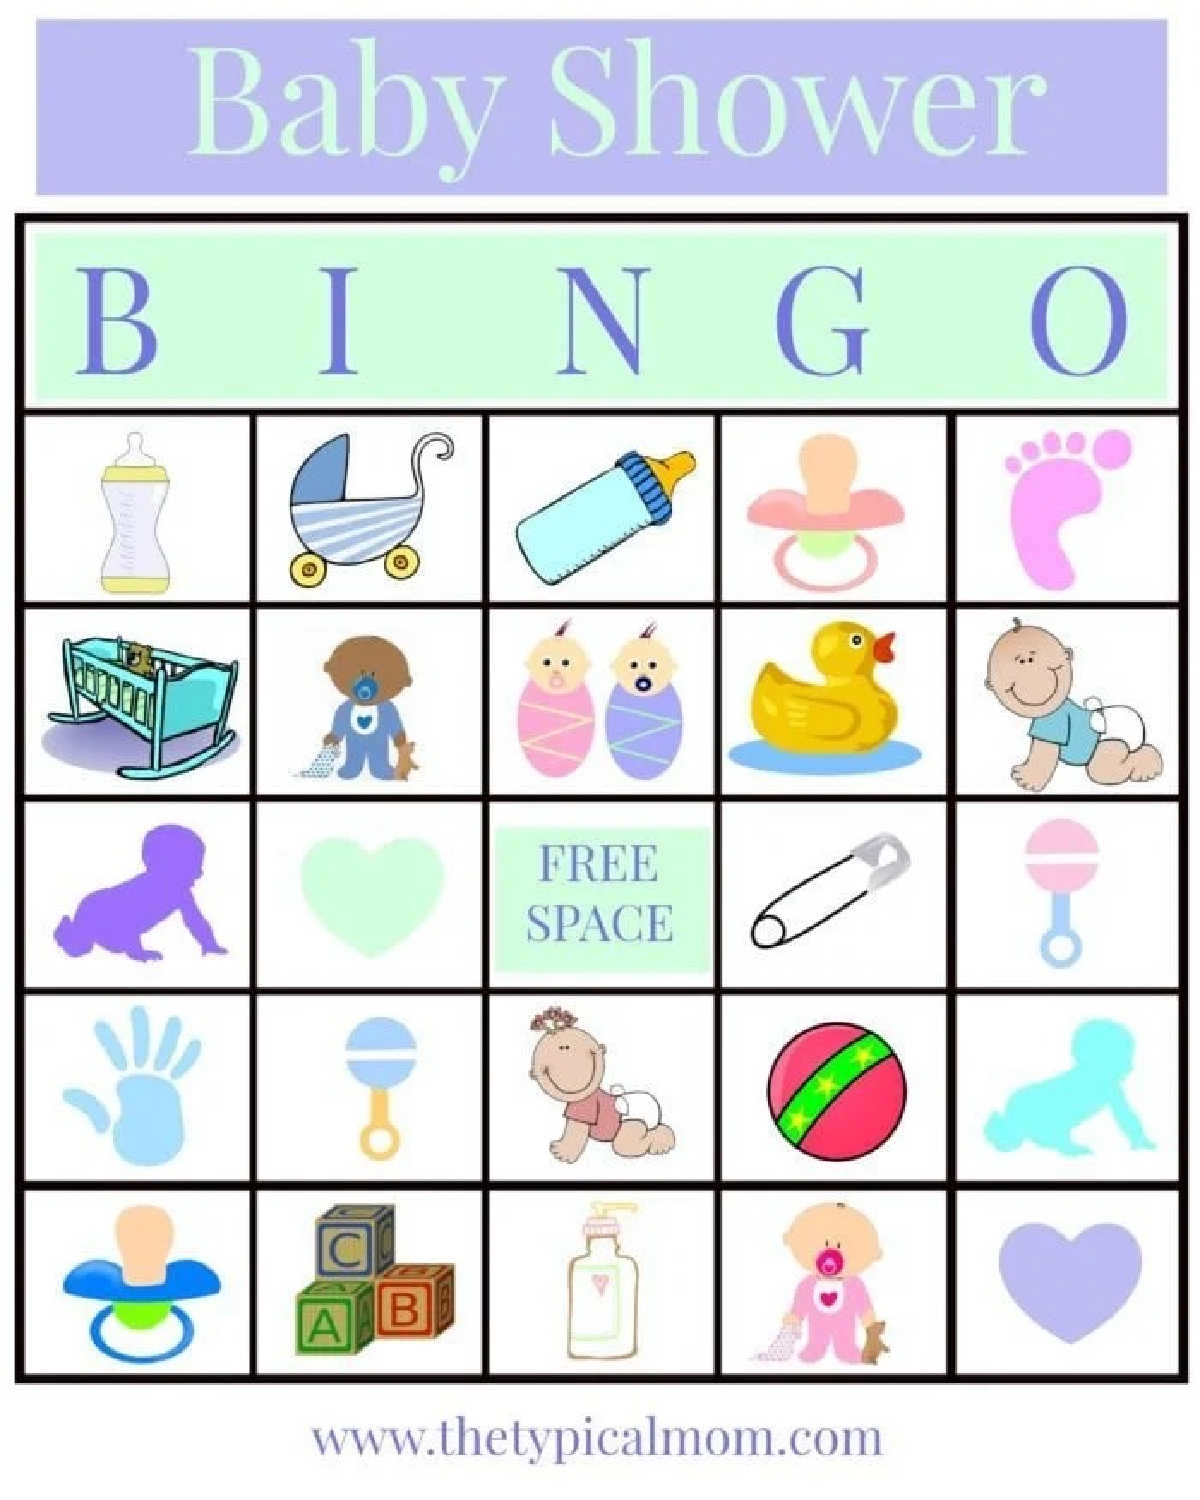 Free Baby Shower Bingo Printable - Free Baby Shower Games - Free Printable Baby Shower Bingo 50 Cards